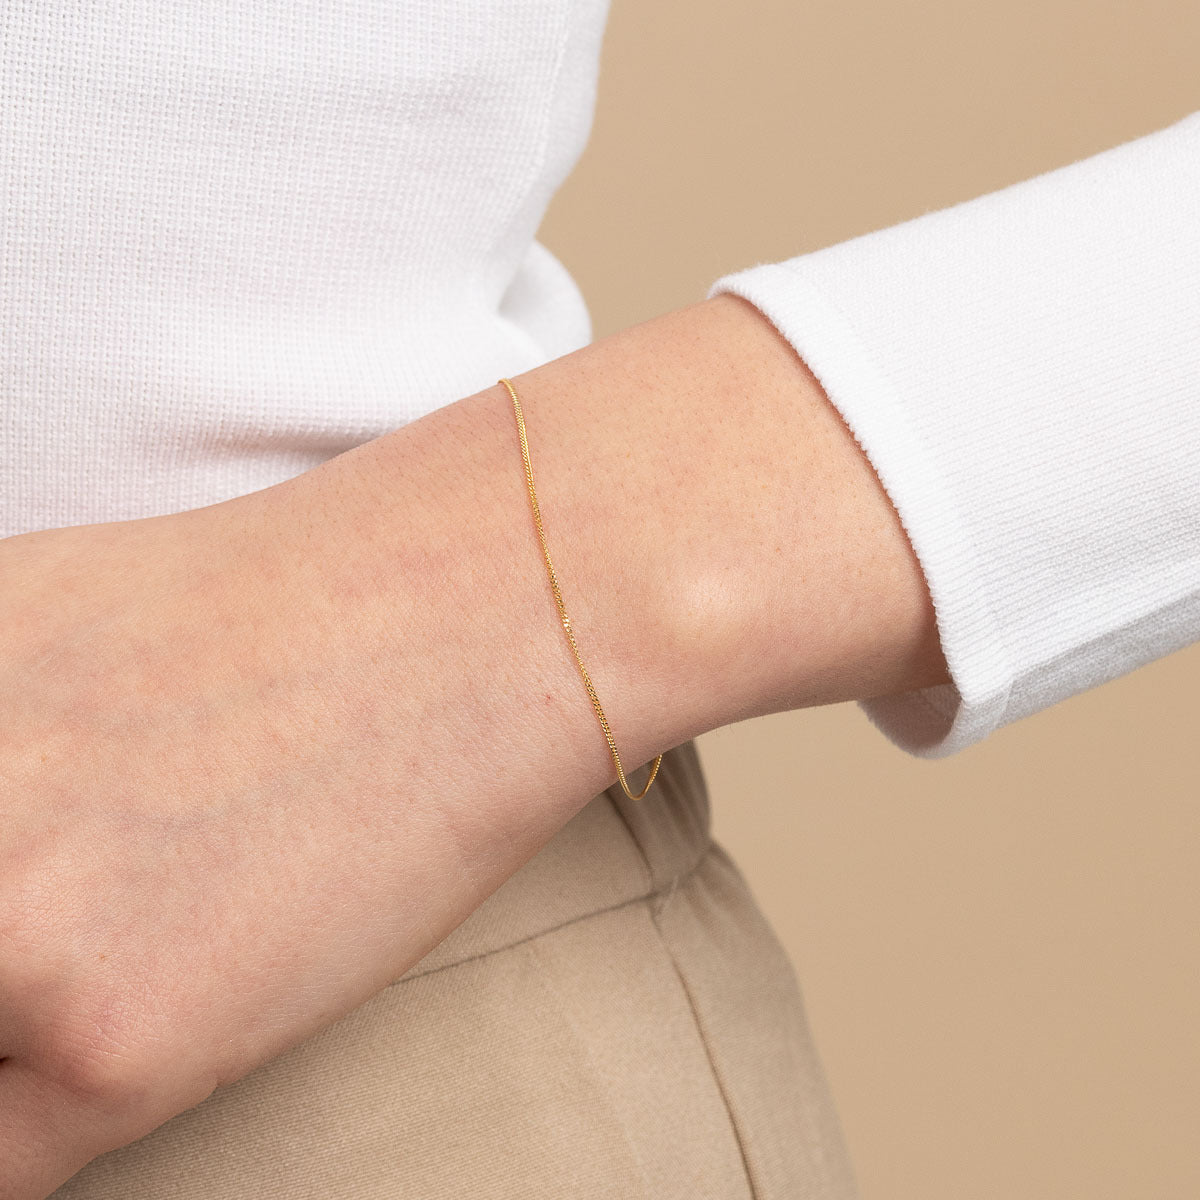 Miyu Chain Bracelet in Solid Gold